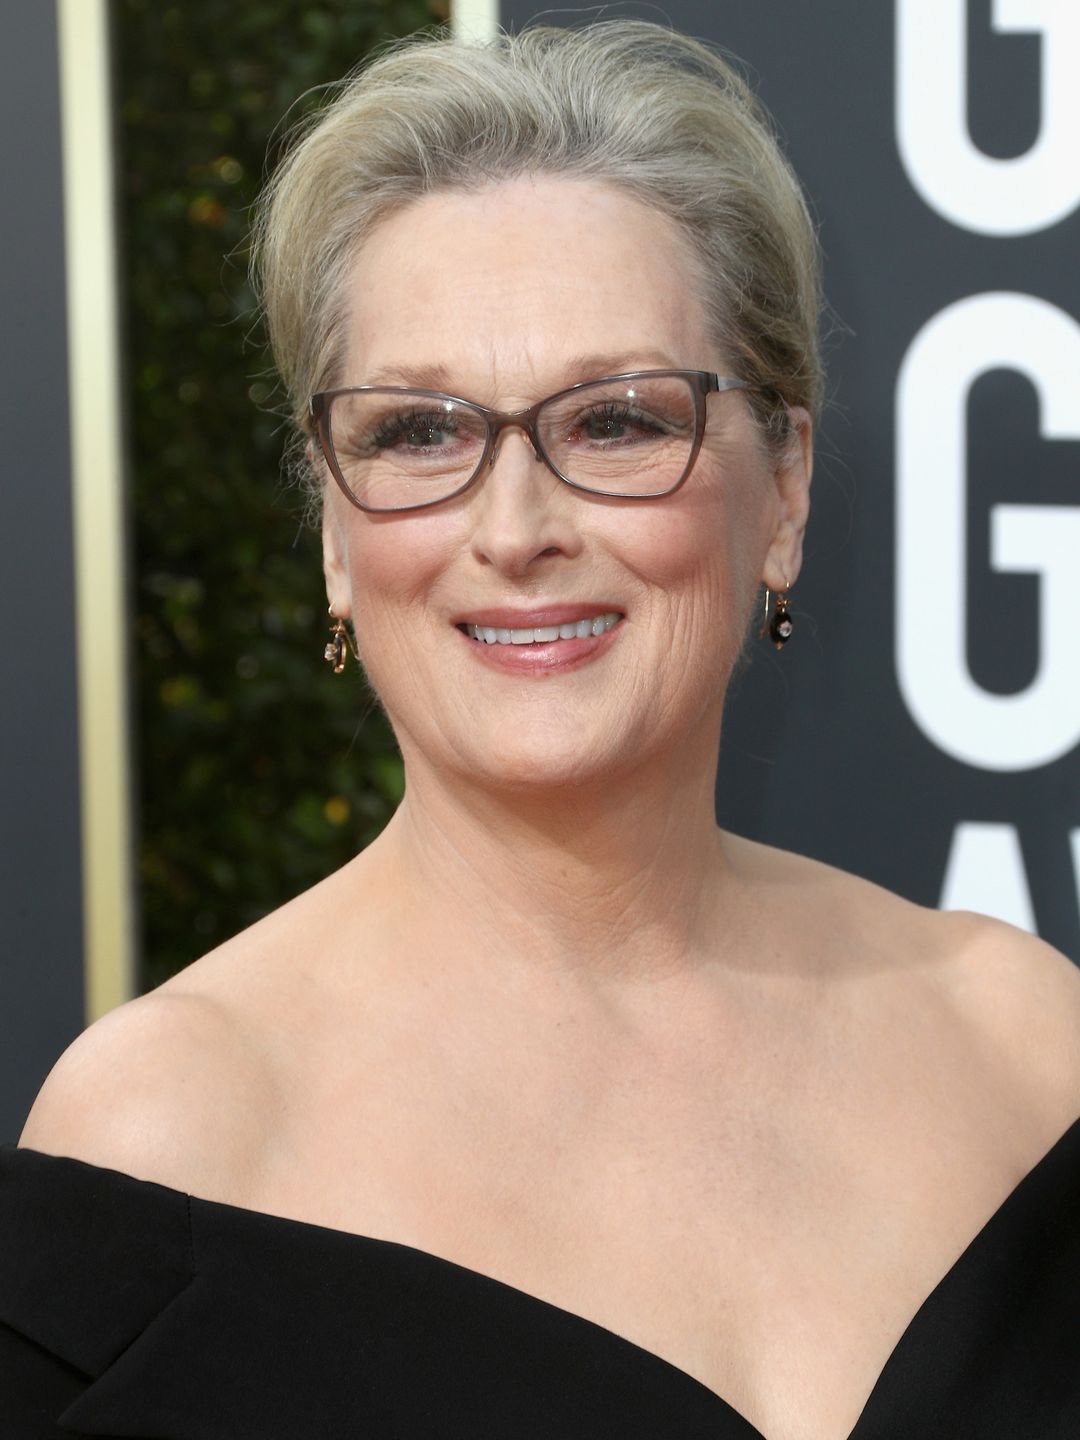 Meryl Streep dating history